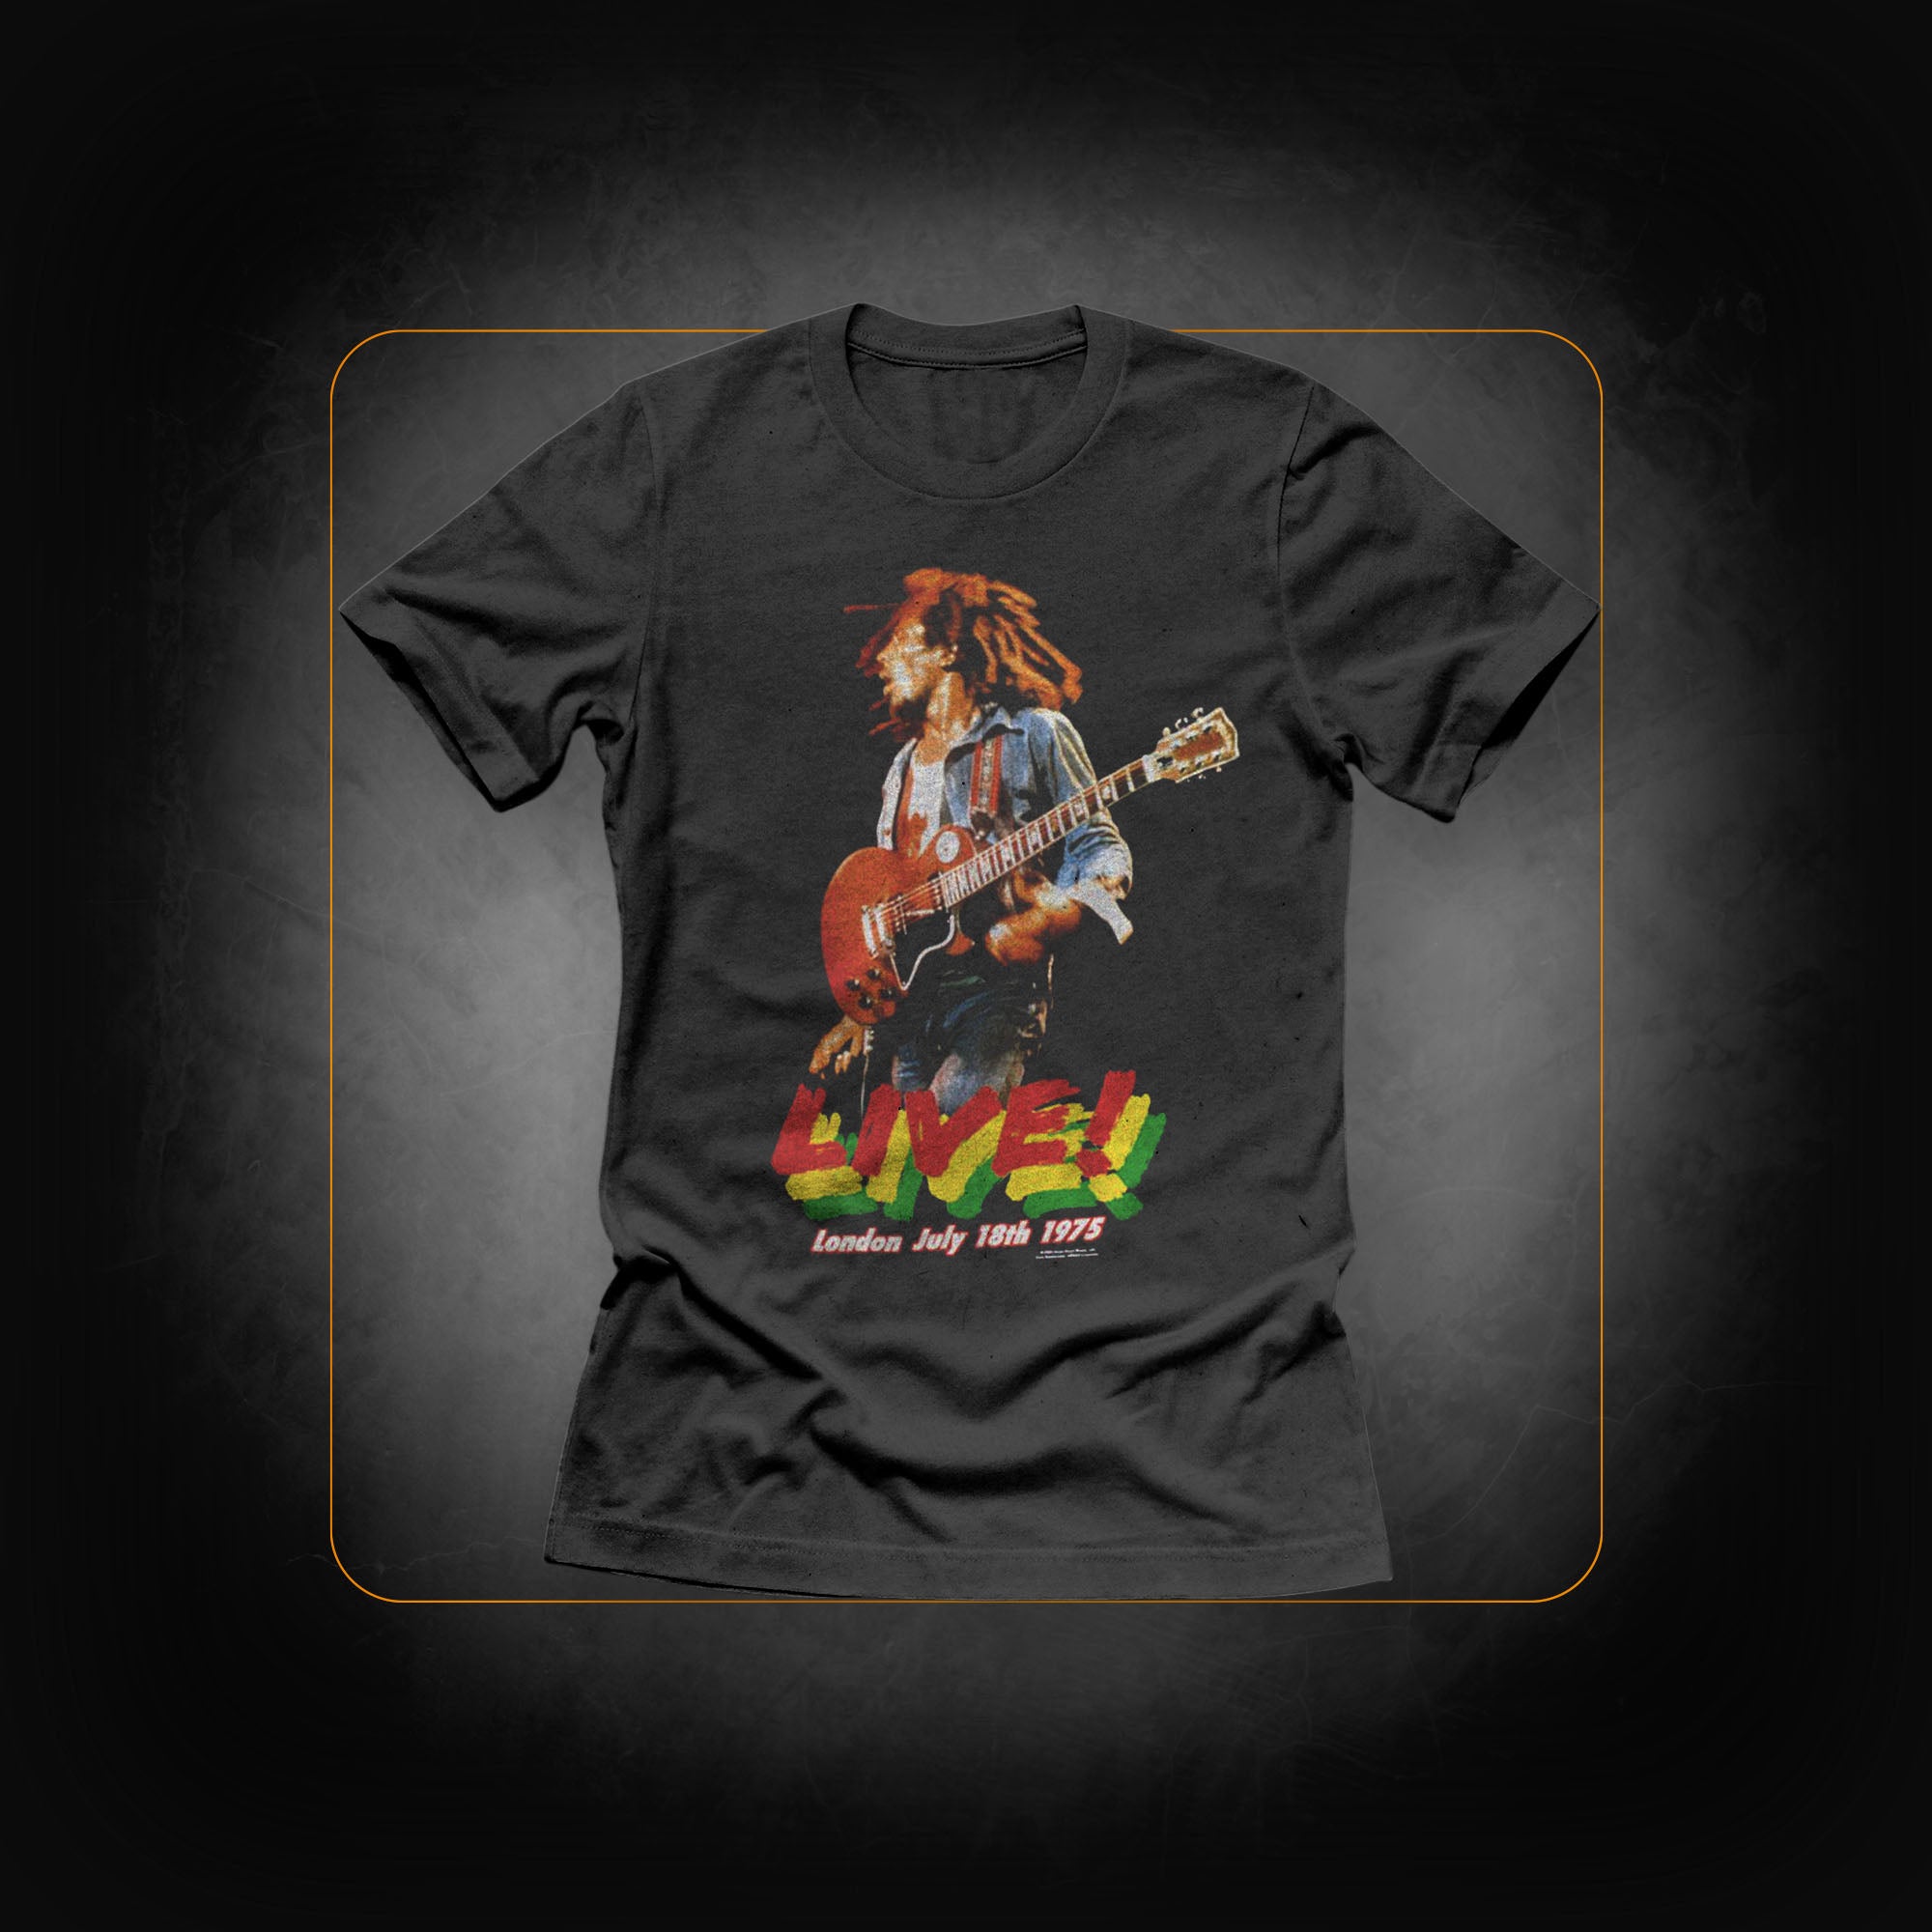 Live London July 1975  Black T-shirt - Bob Marley